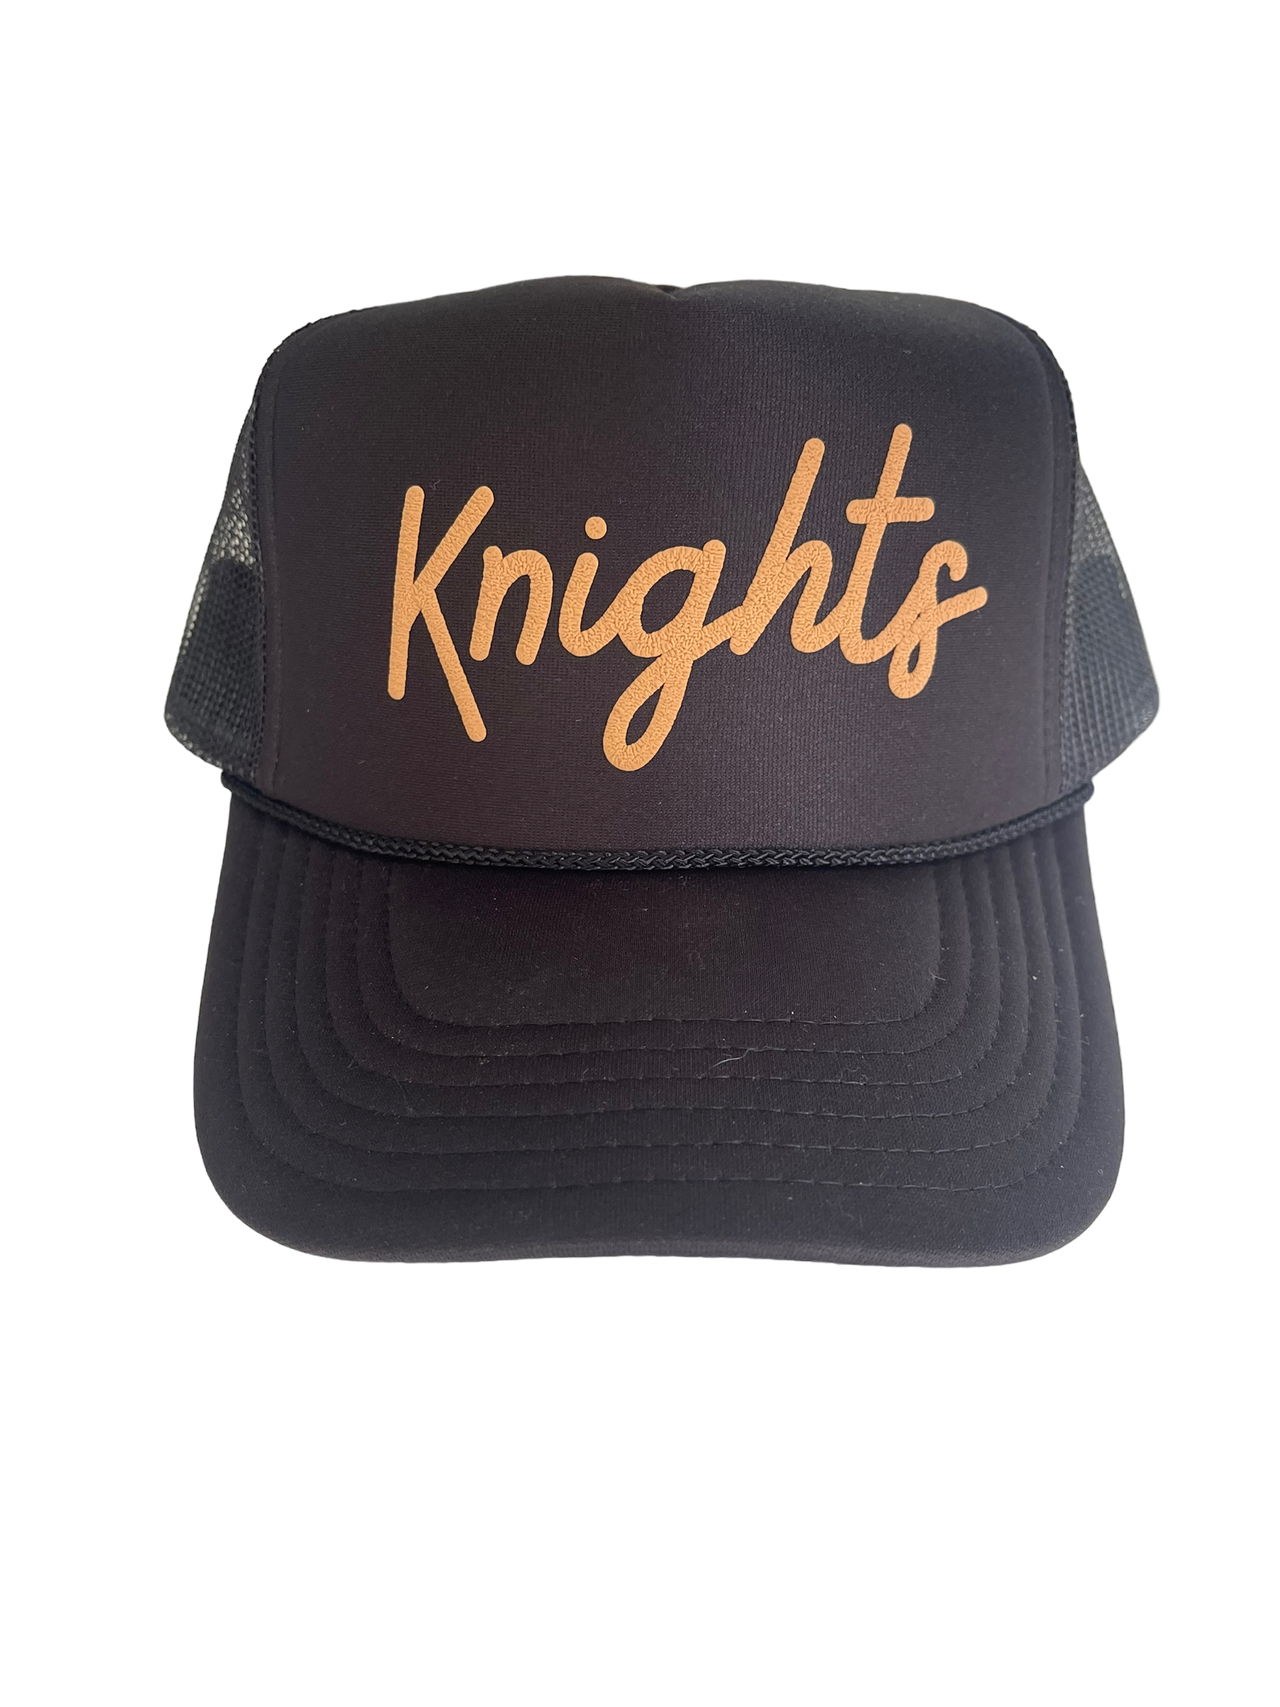 Knights - Puffy Trucker